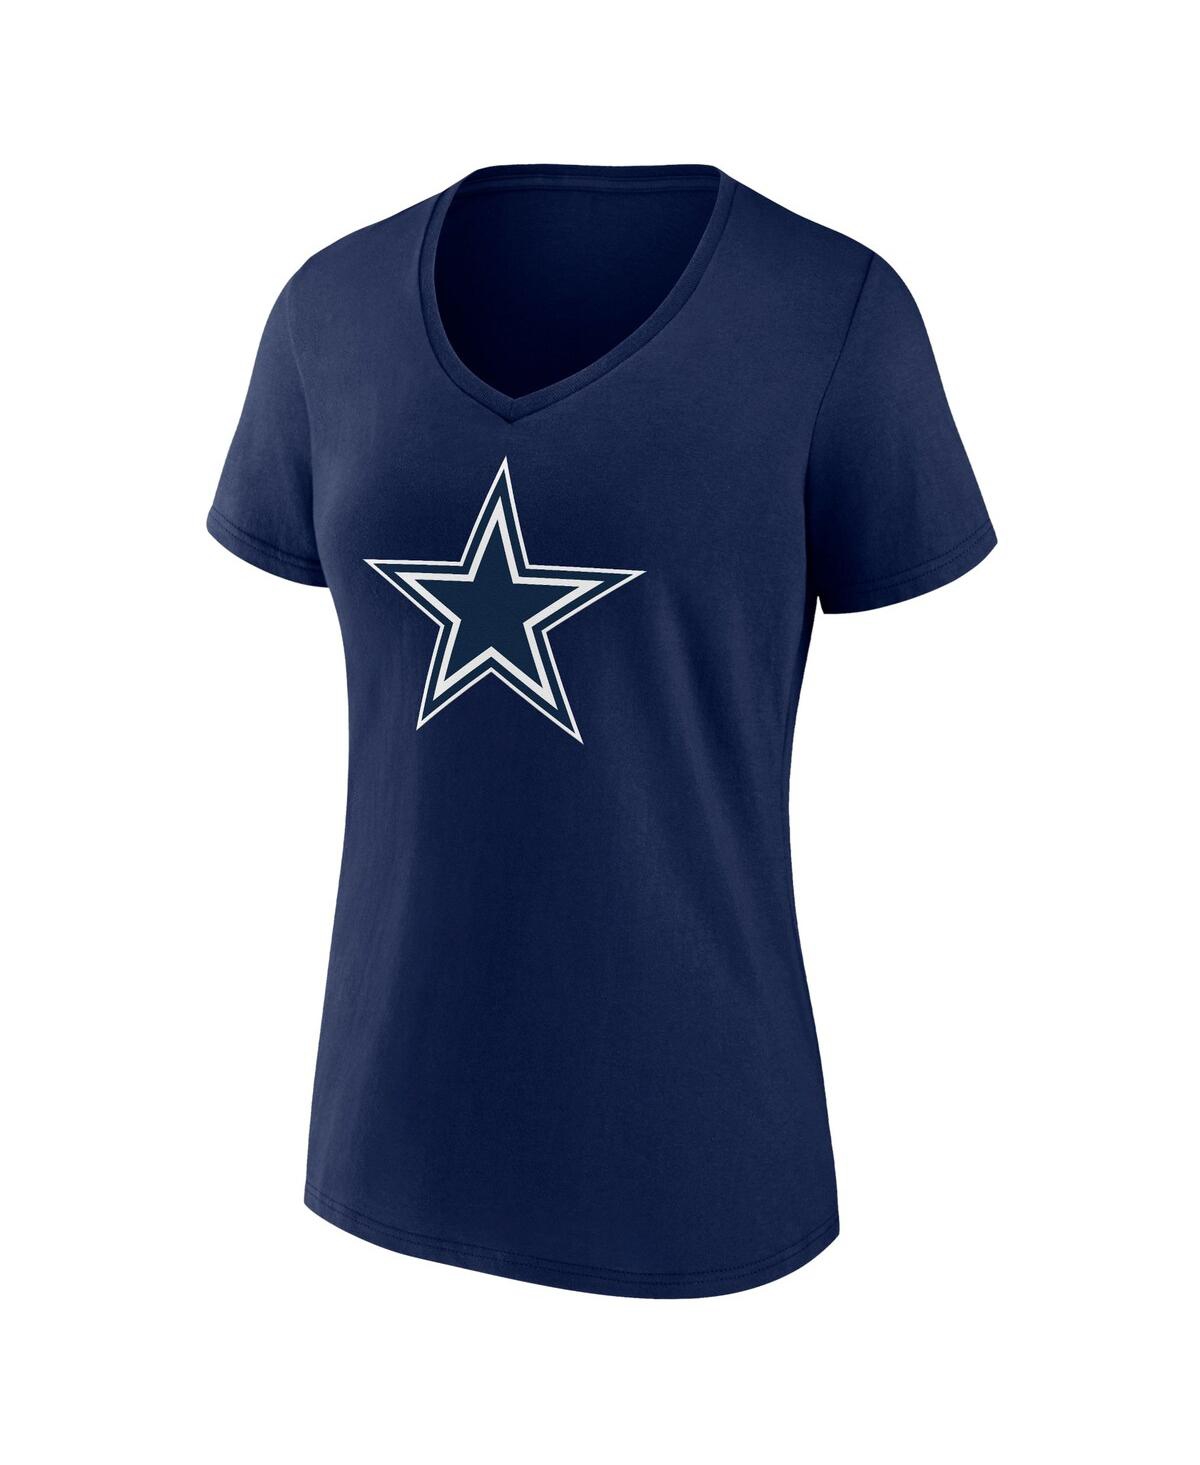 Shop Fanatics Women's  Navy Dallas Cowboys Mother's Day V-neck T-shirt